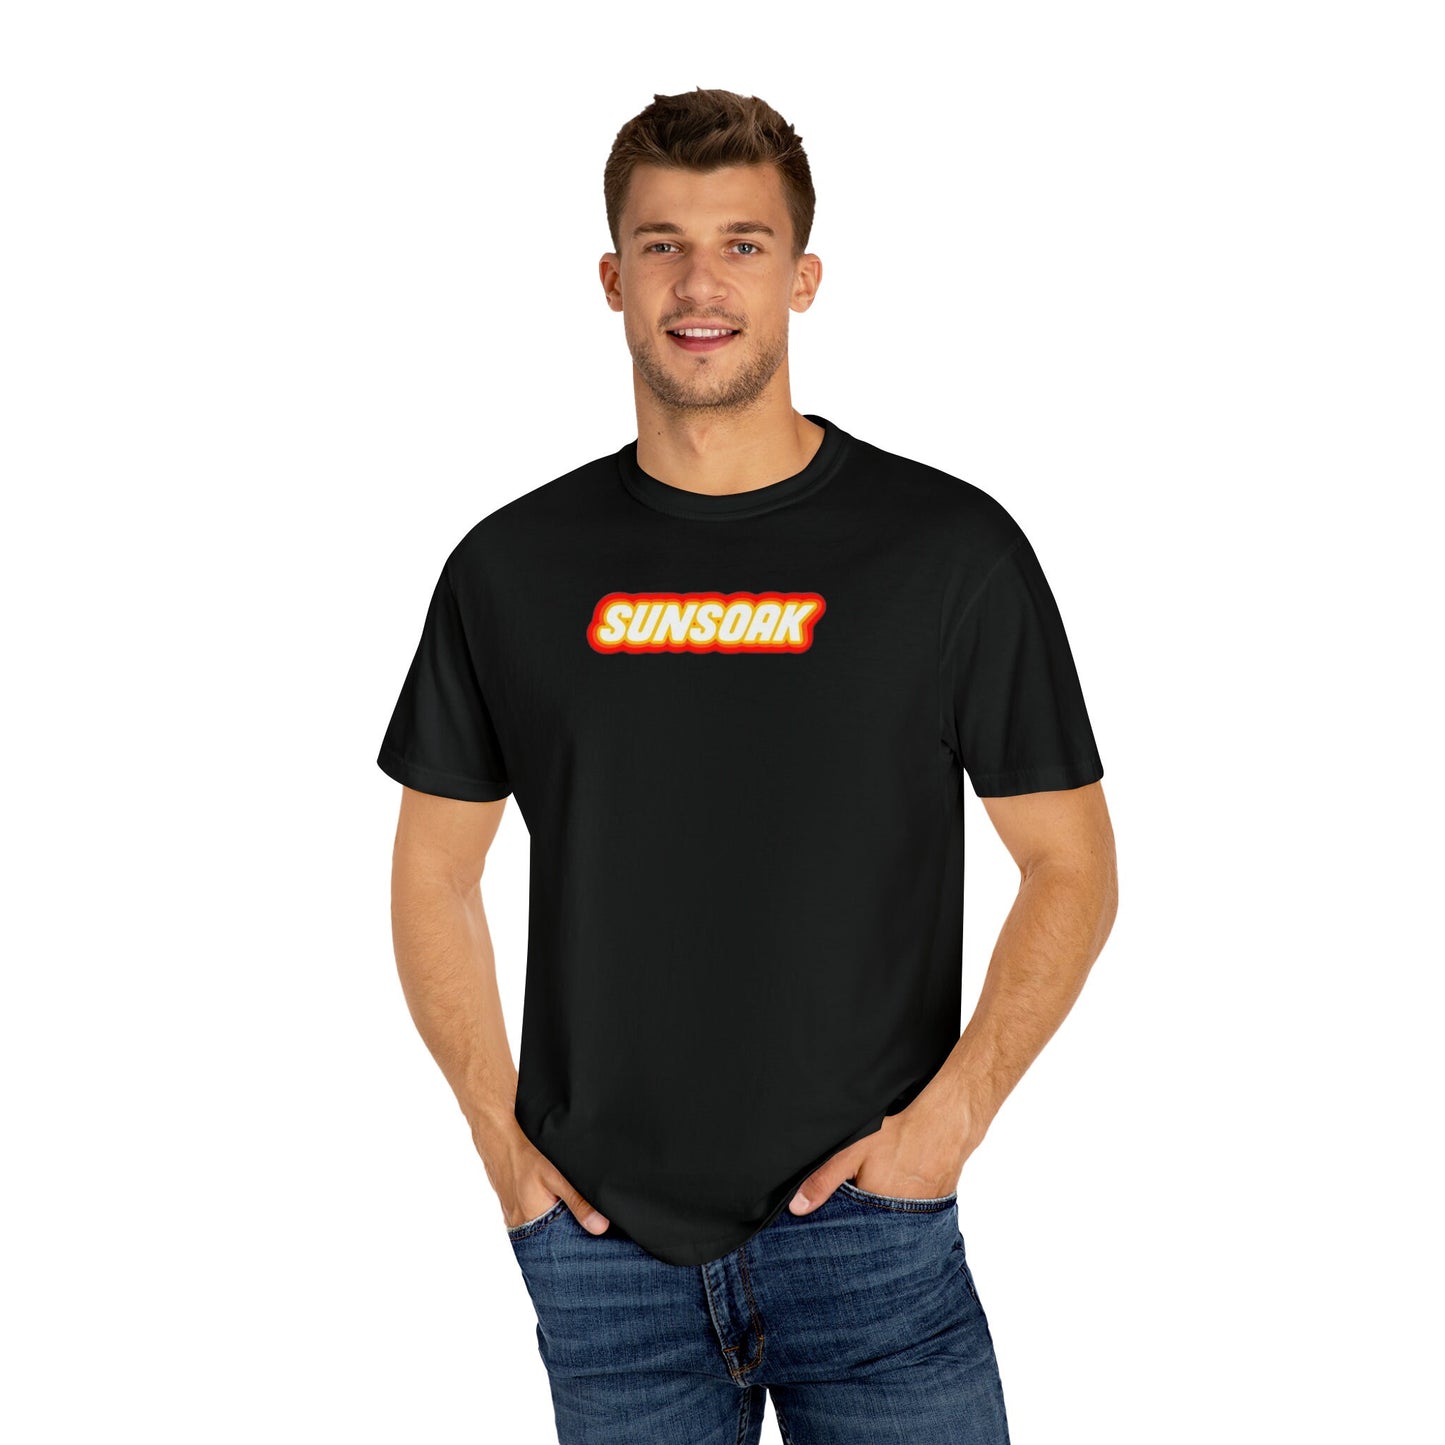 SUNSOAK "Radiant" T-Shirt